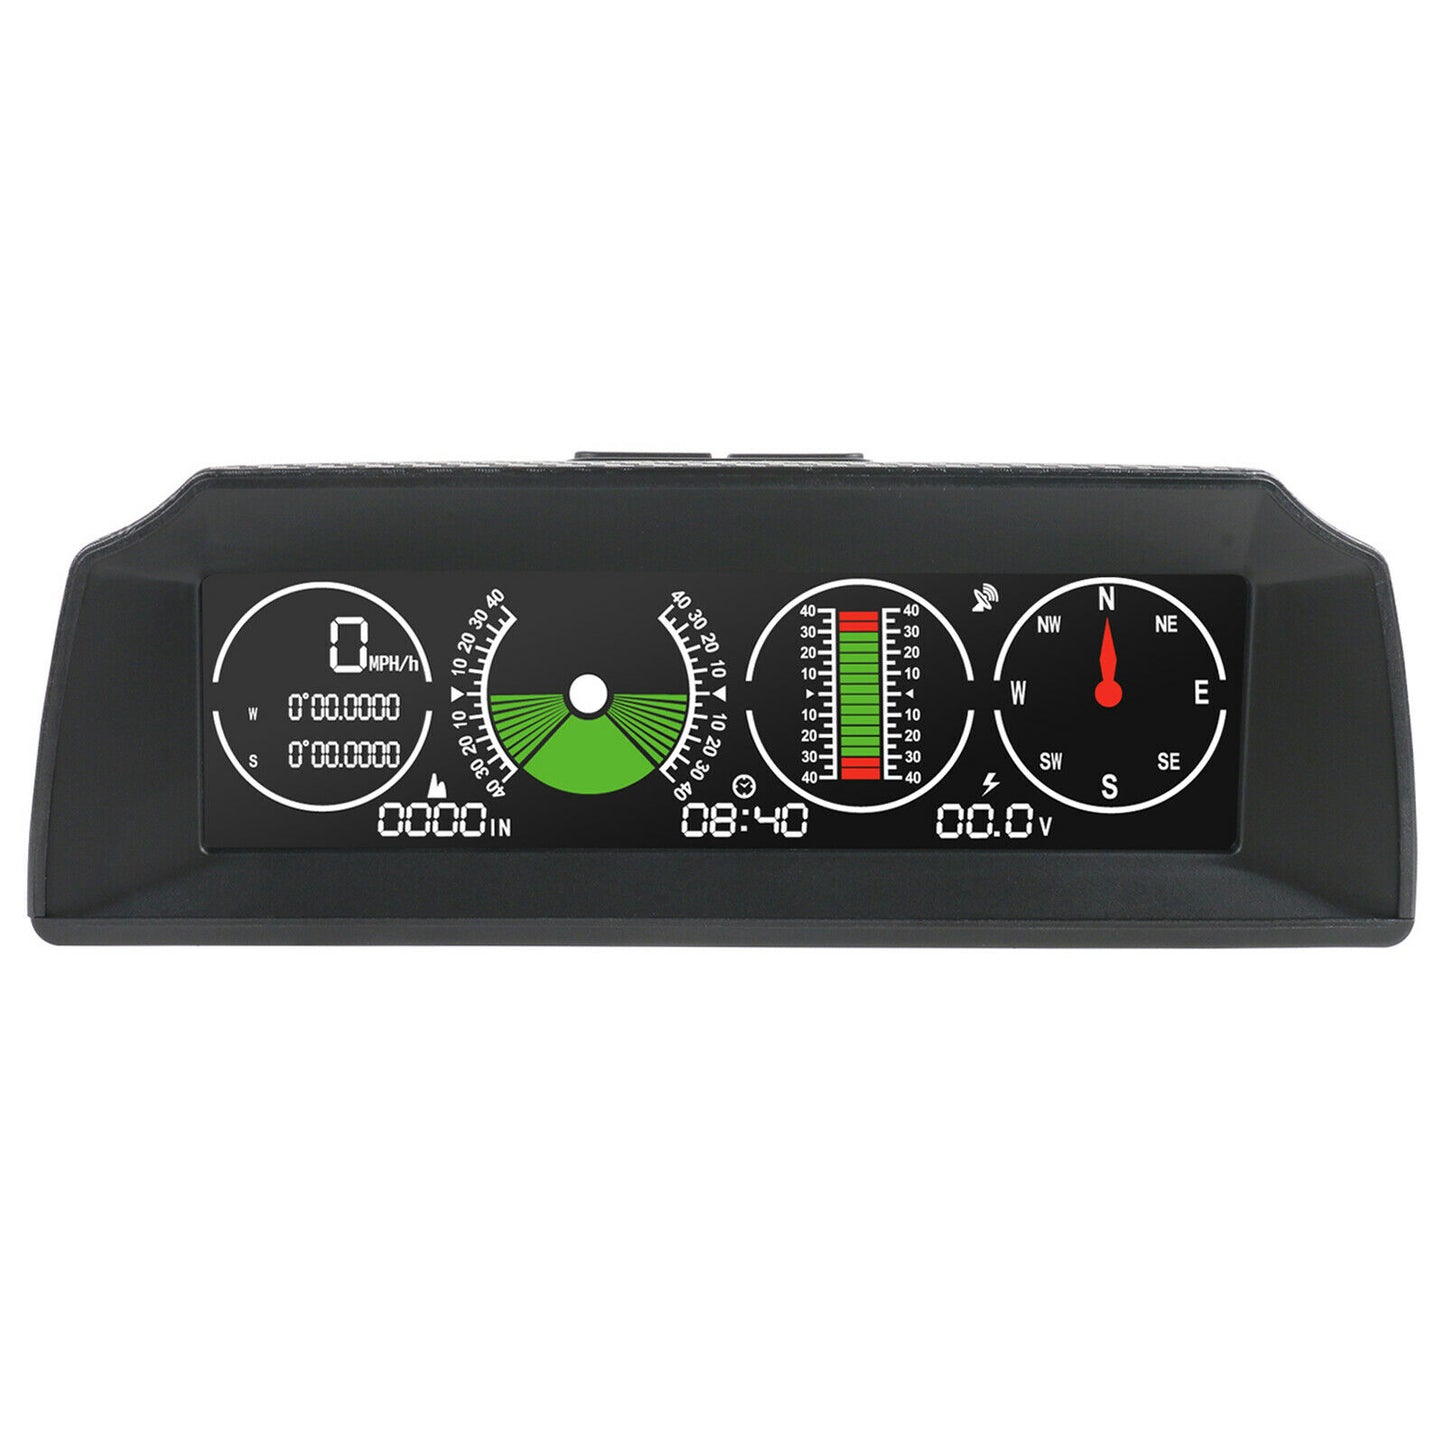 AUTOOL X90 Smart GPS hældningsmåler Speedometer Head Up Display Over Speed Alarm